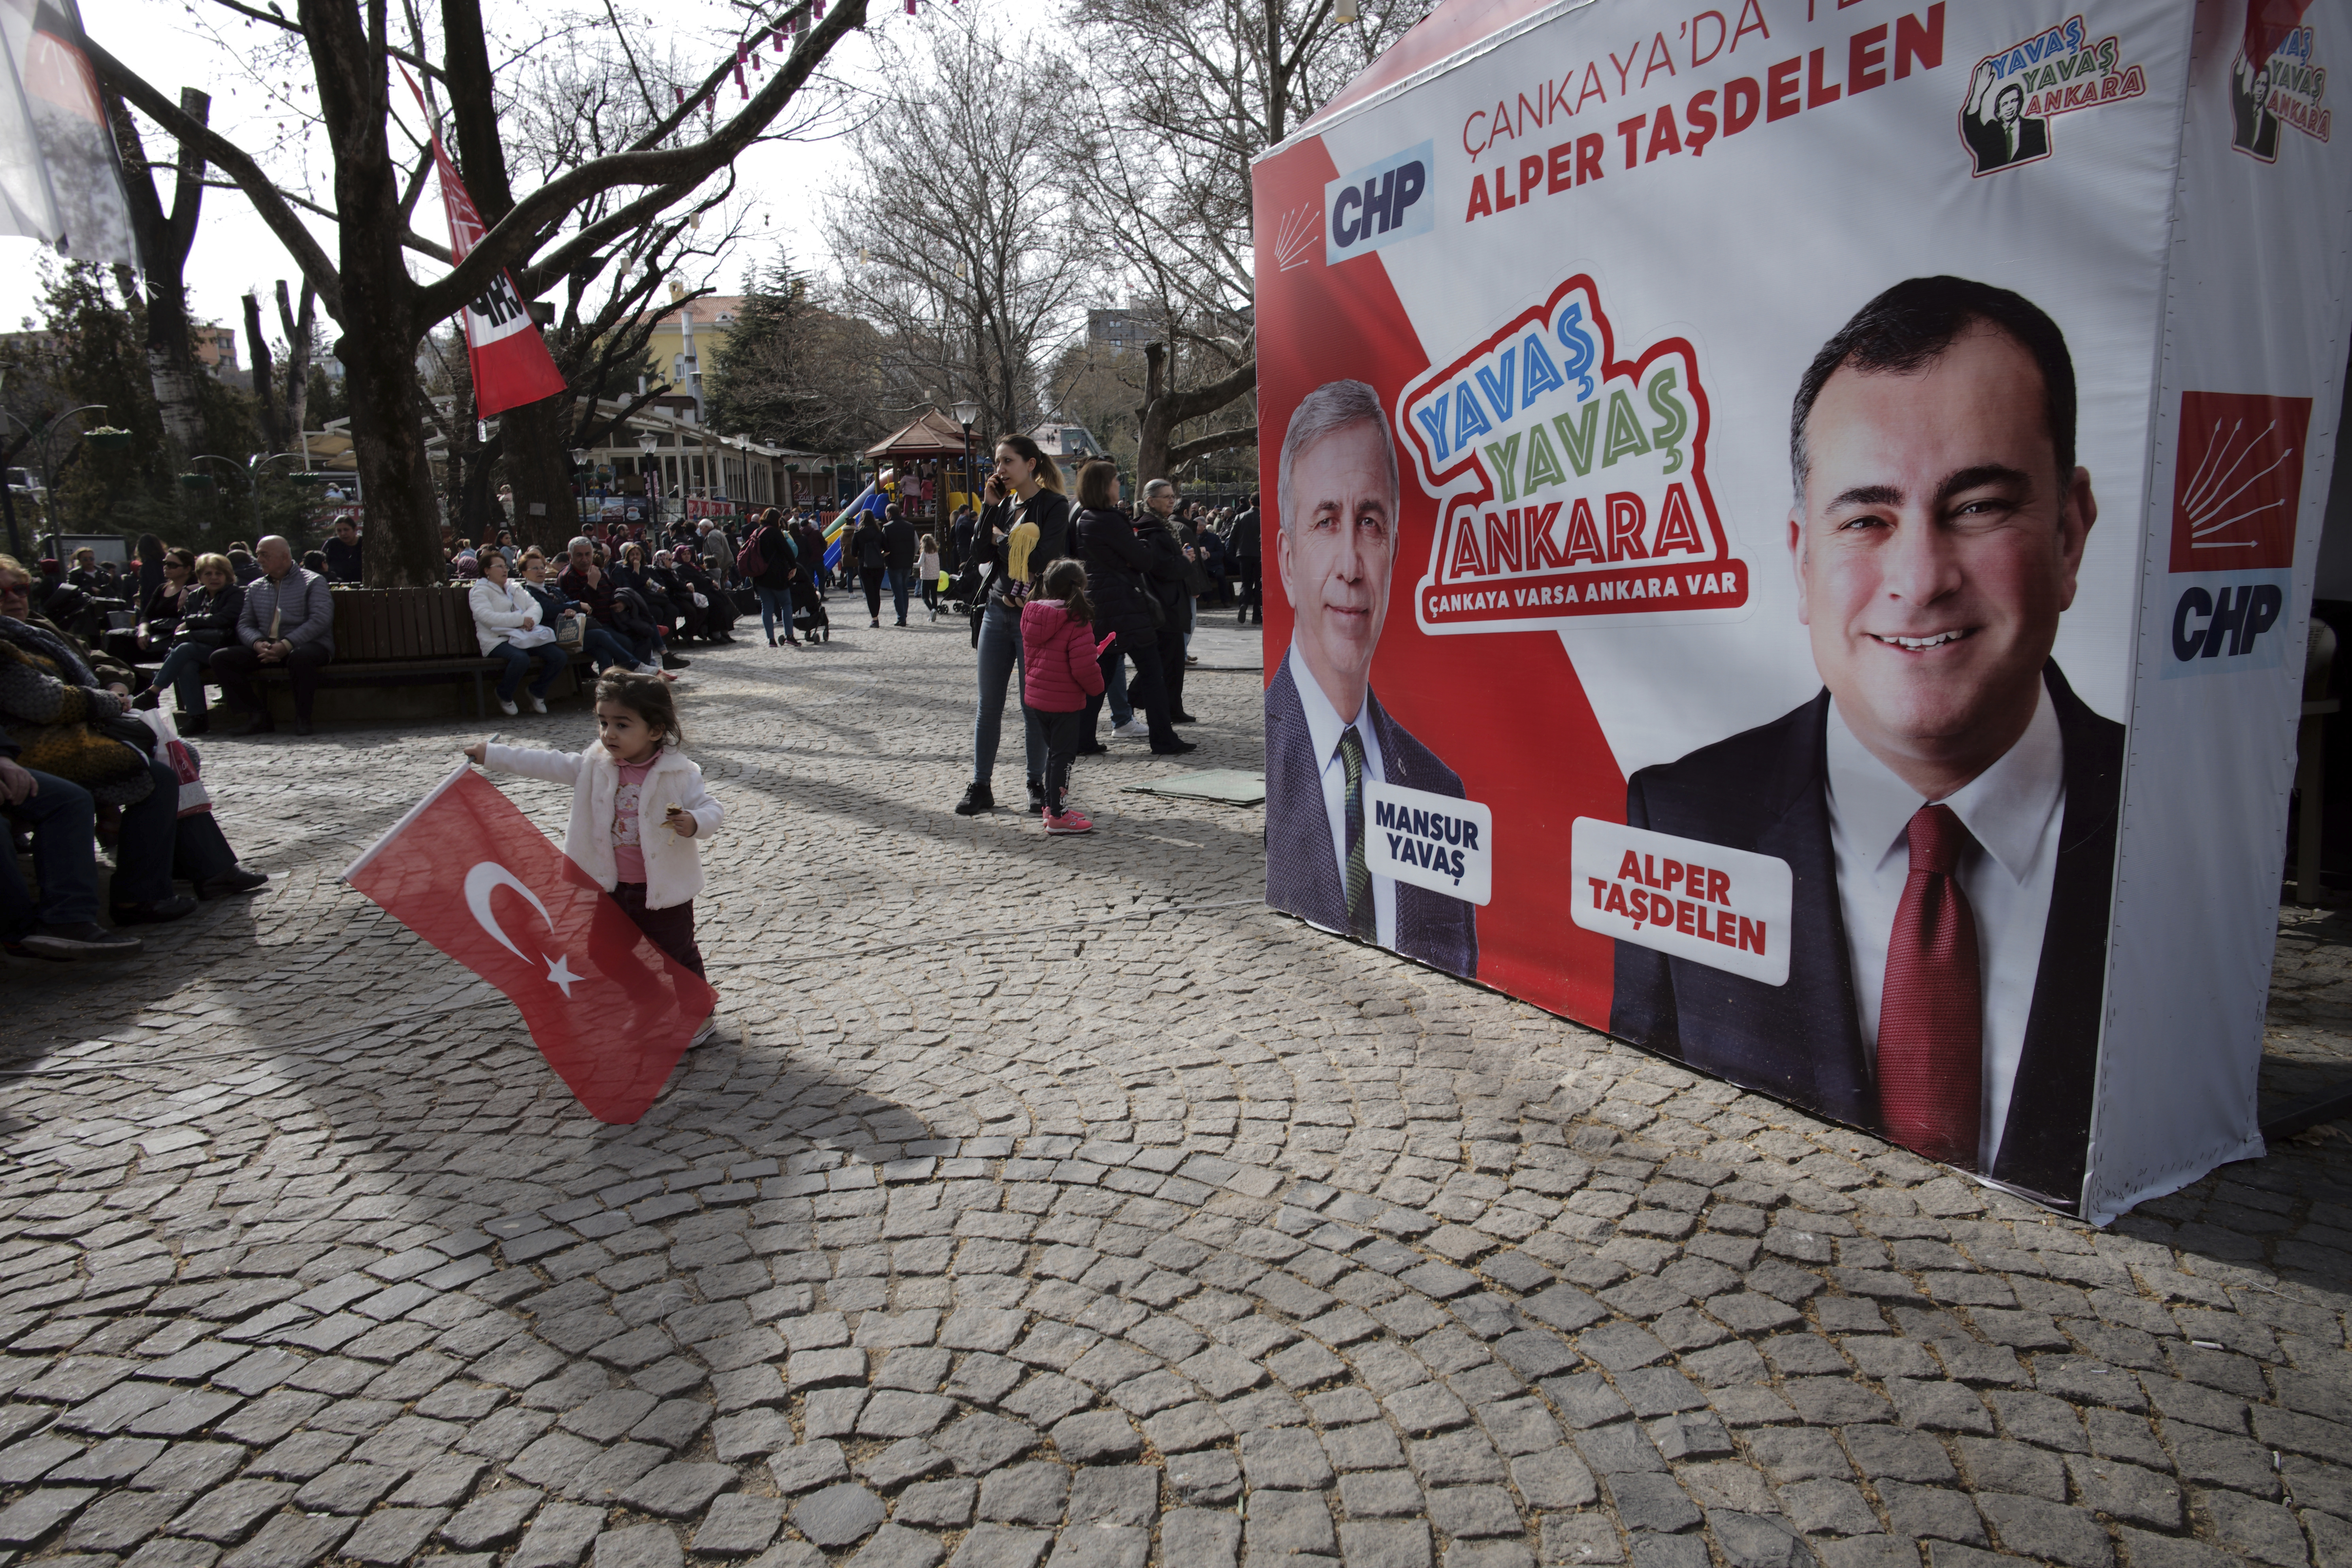 Billboards for the candidates of Turkey's main opposition bloc, Mansur Yavas for Ankara Metropole, left, and Alper Tasdelen for Cankaya district, in Ankara, Turkey.